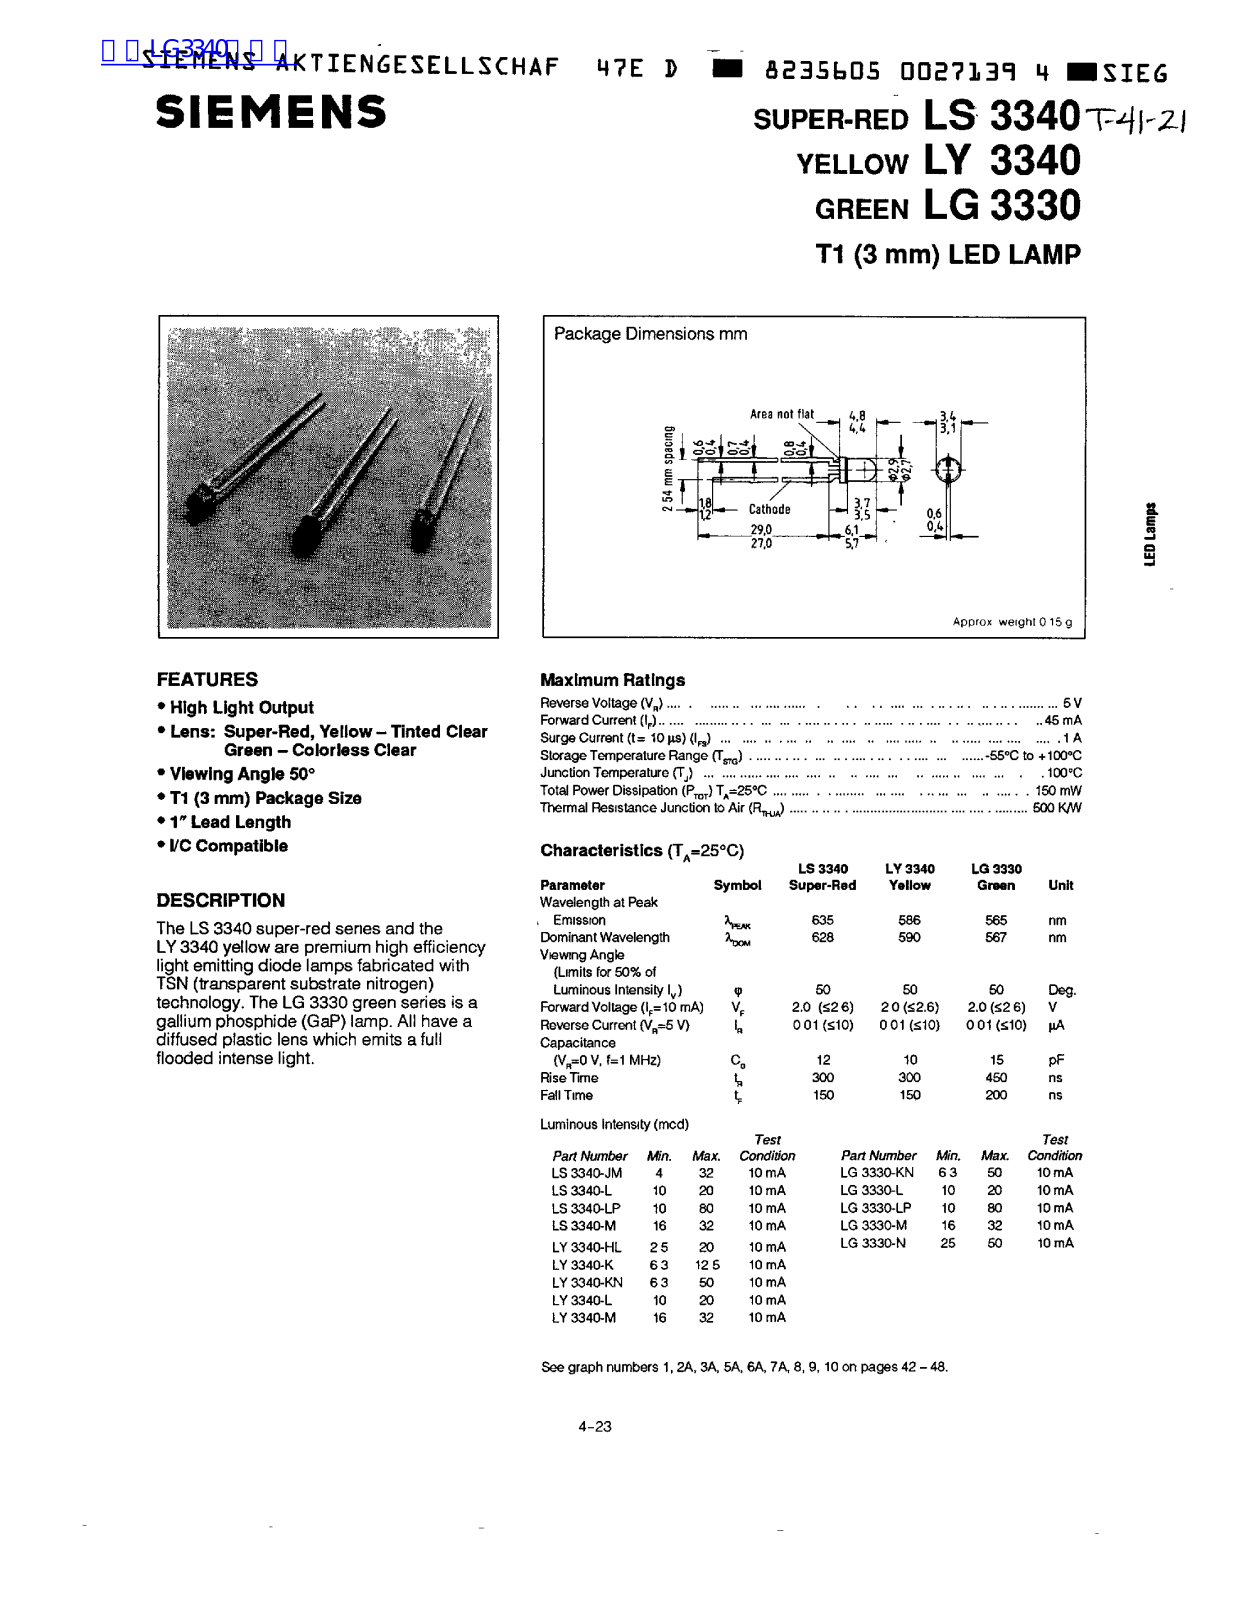 Siemens LS3340, LY 3340, LG 3330 Technical data